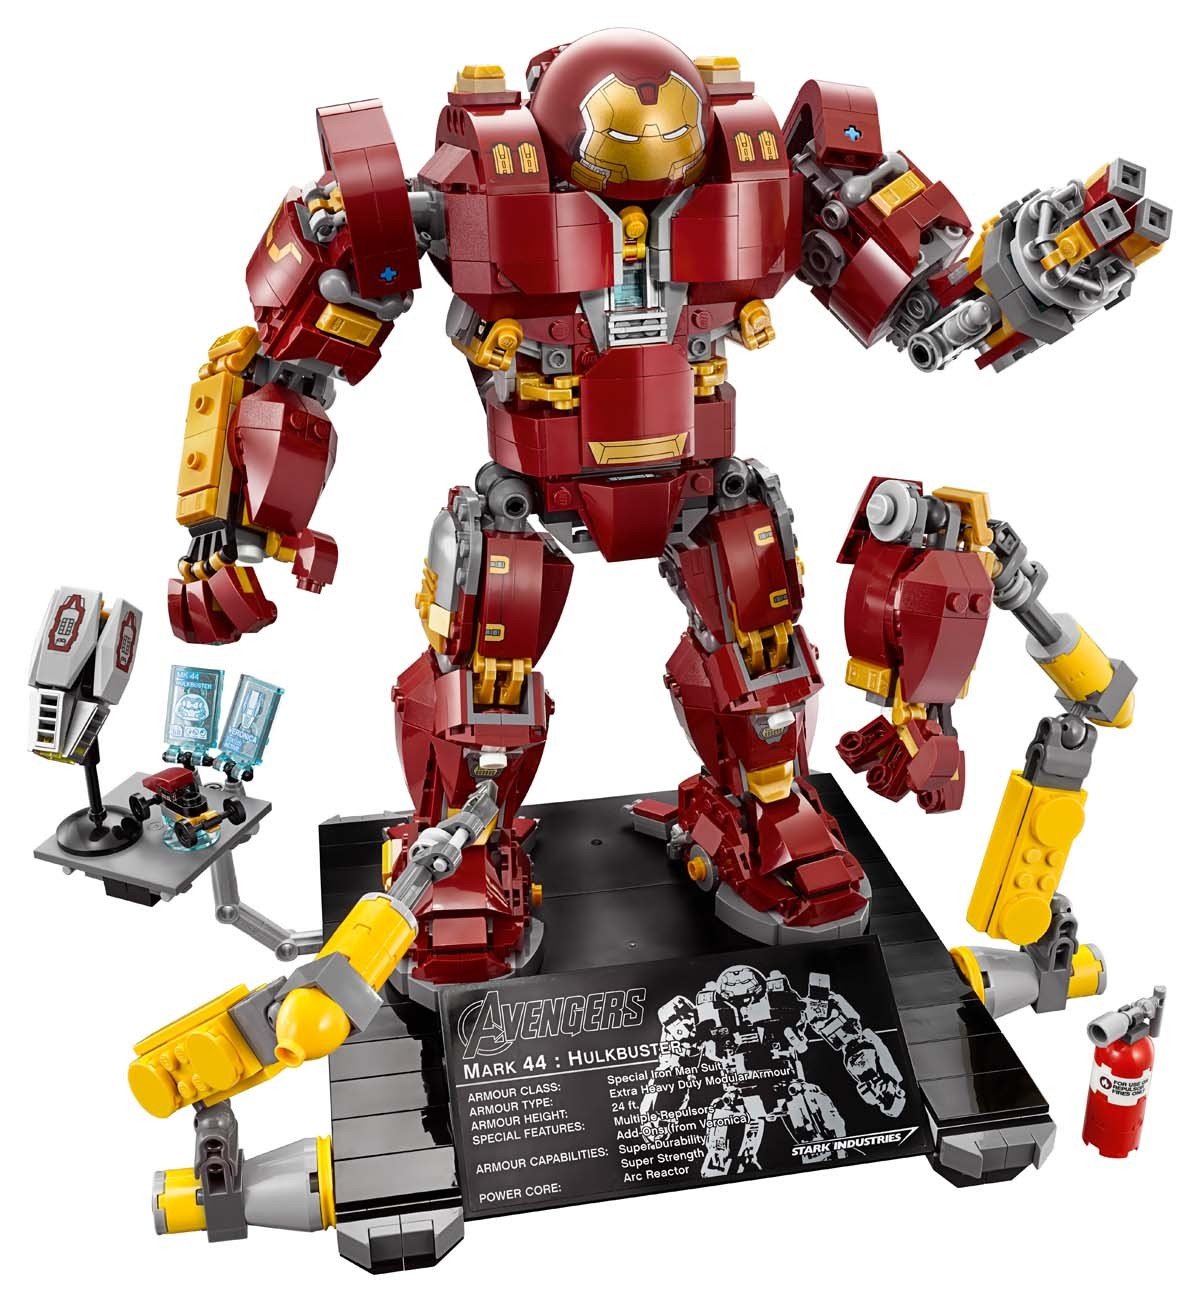 check-out-this-incredibly-cool-iron-man-hulkbuster-lego-playset1.jpeg